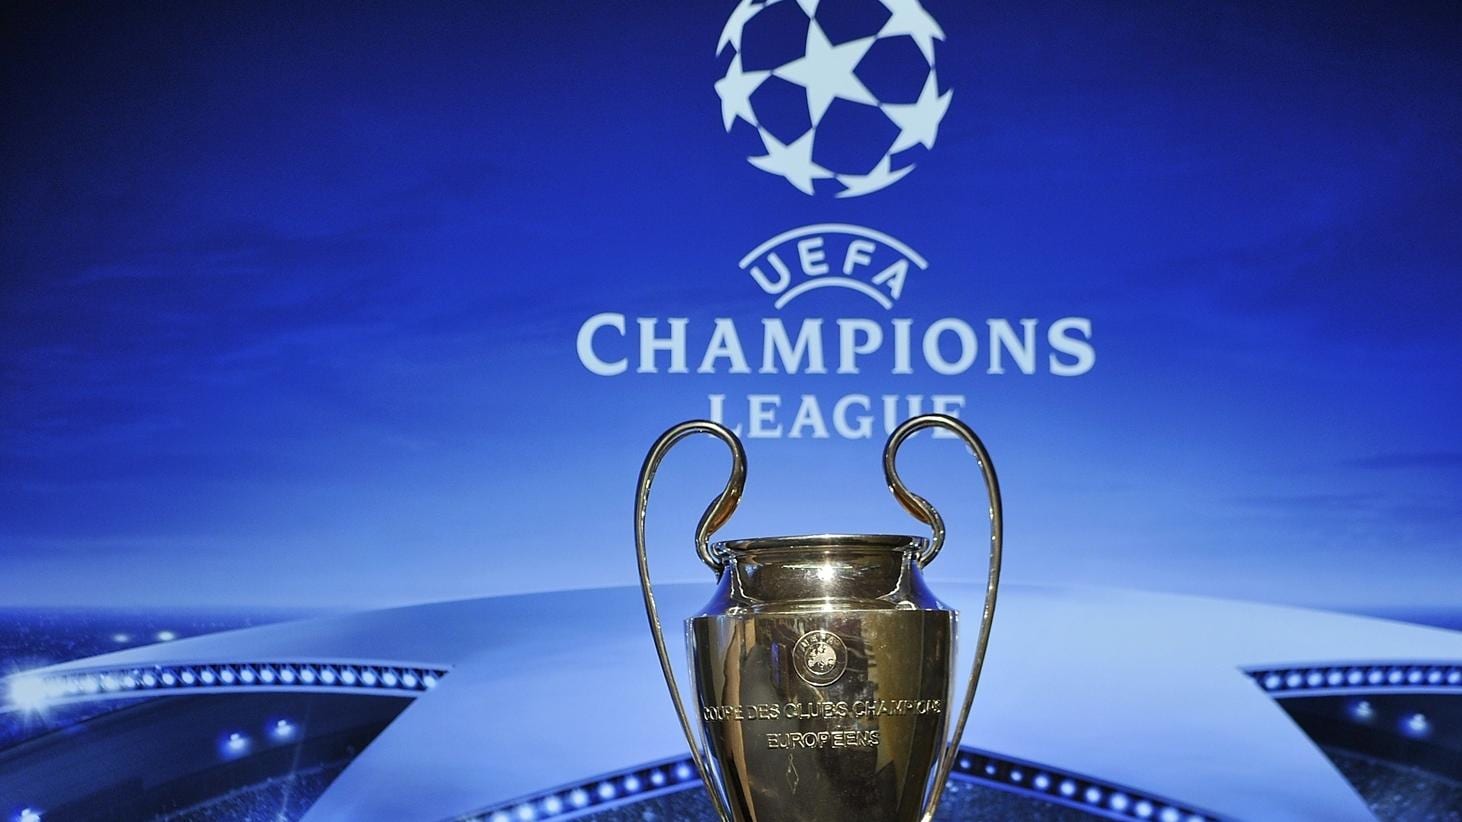 PepsiCo becomes an official UEFA Champions League sponsor ...